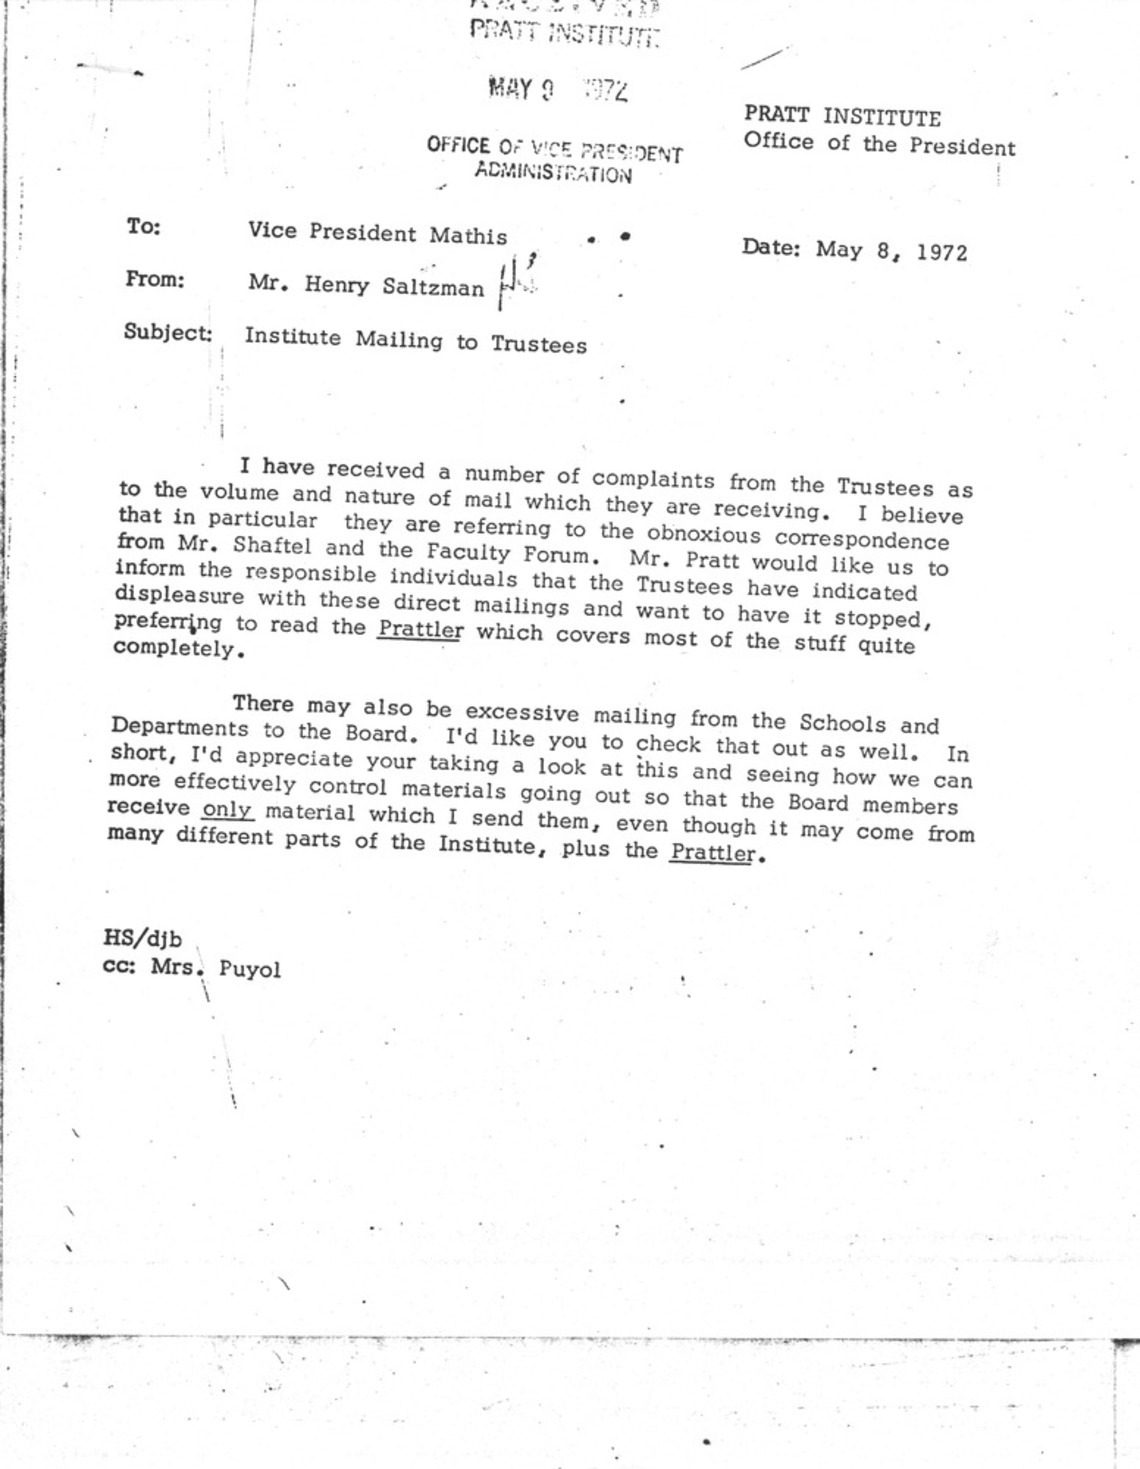 Letter to Vice President Mathis from Henry Saltzman